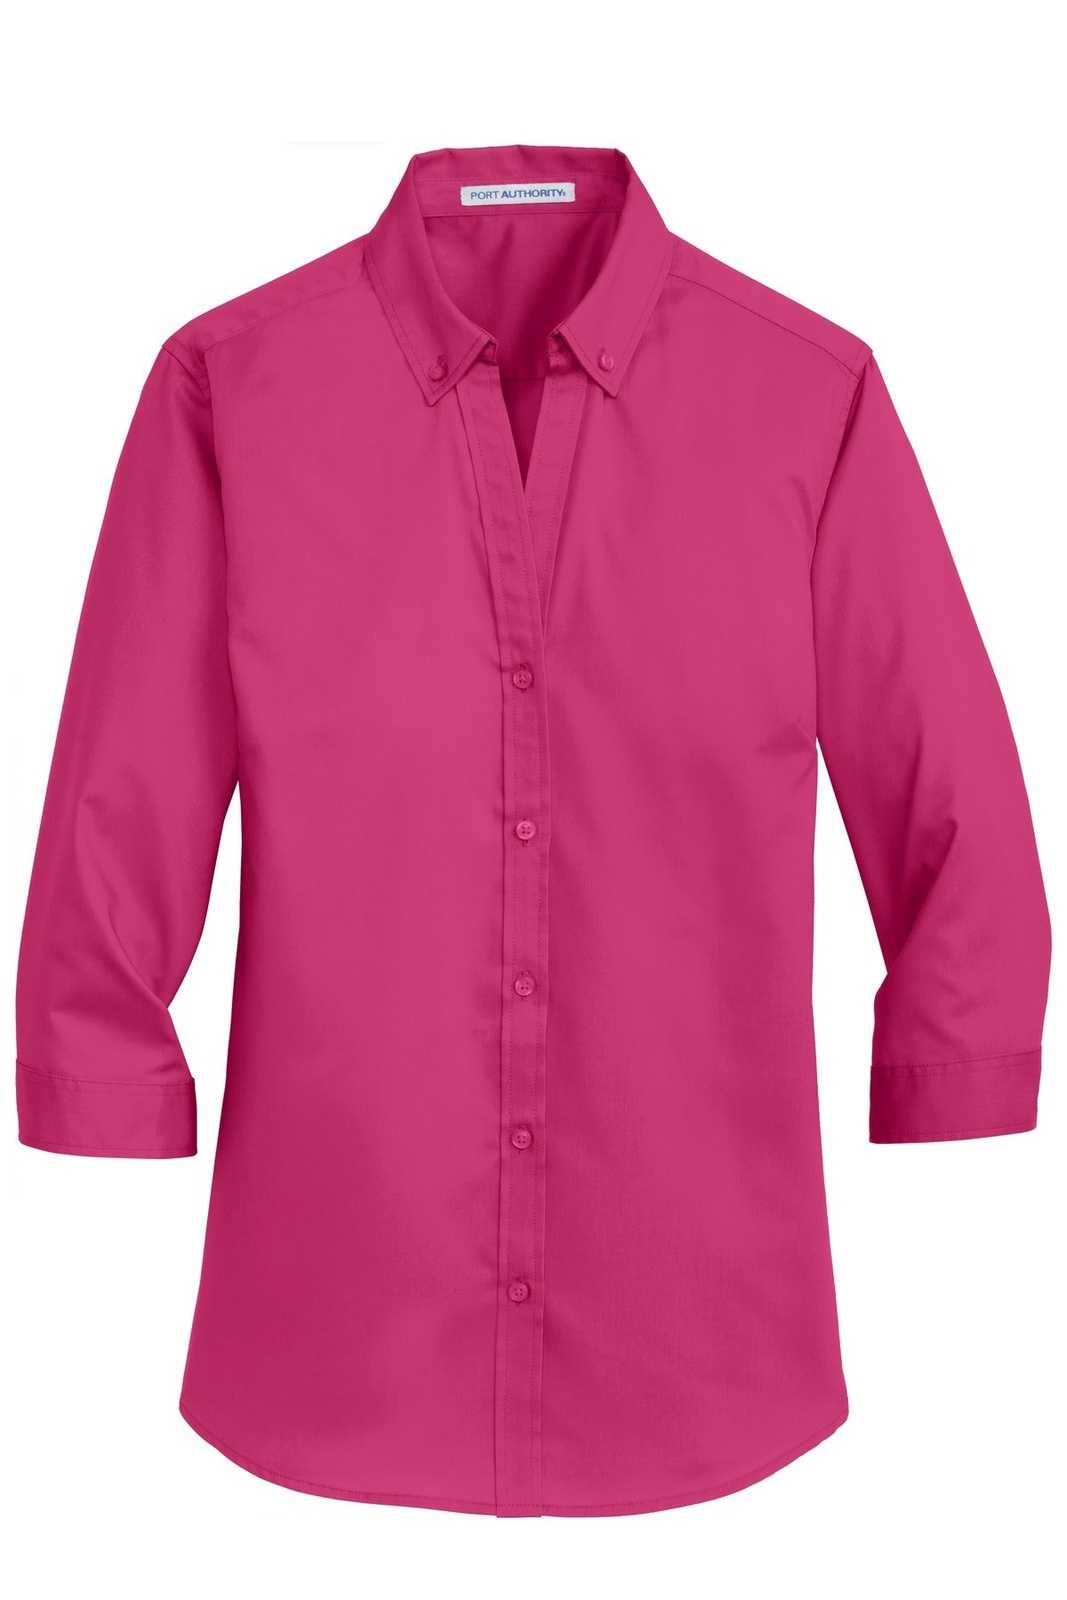 Port Authority L665 Ladies 3/4-Sleeve Superpro Twill Shirt - Pink Azalea - HIT a Double - 5